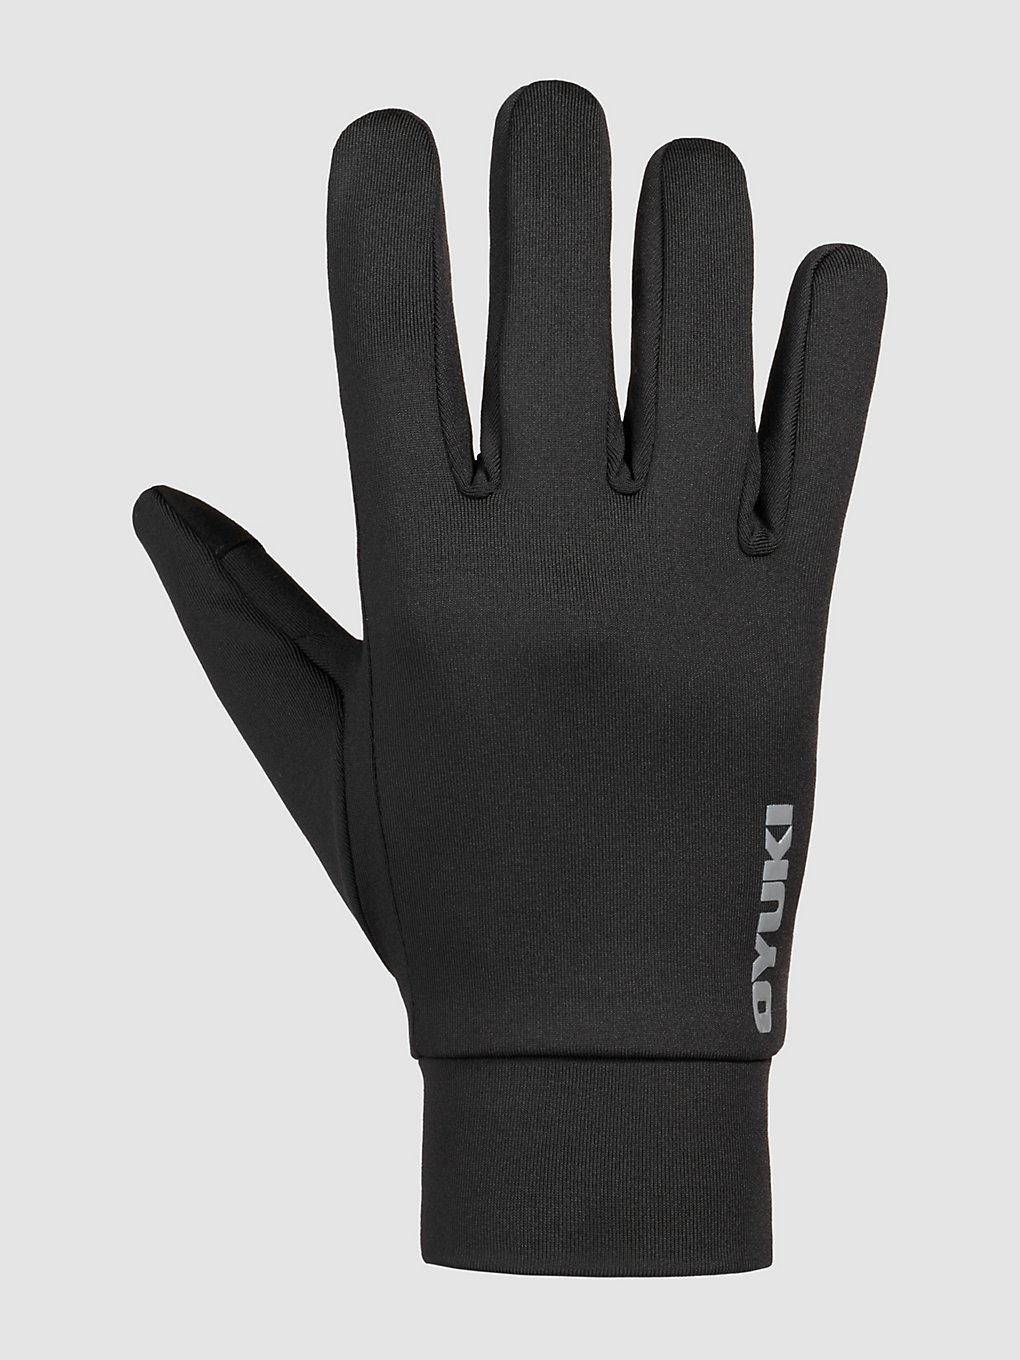 Oyuki Proliner Handschuhe black kaufen